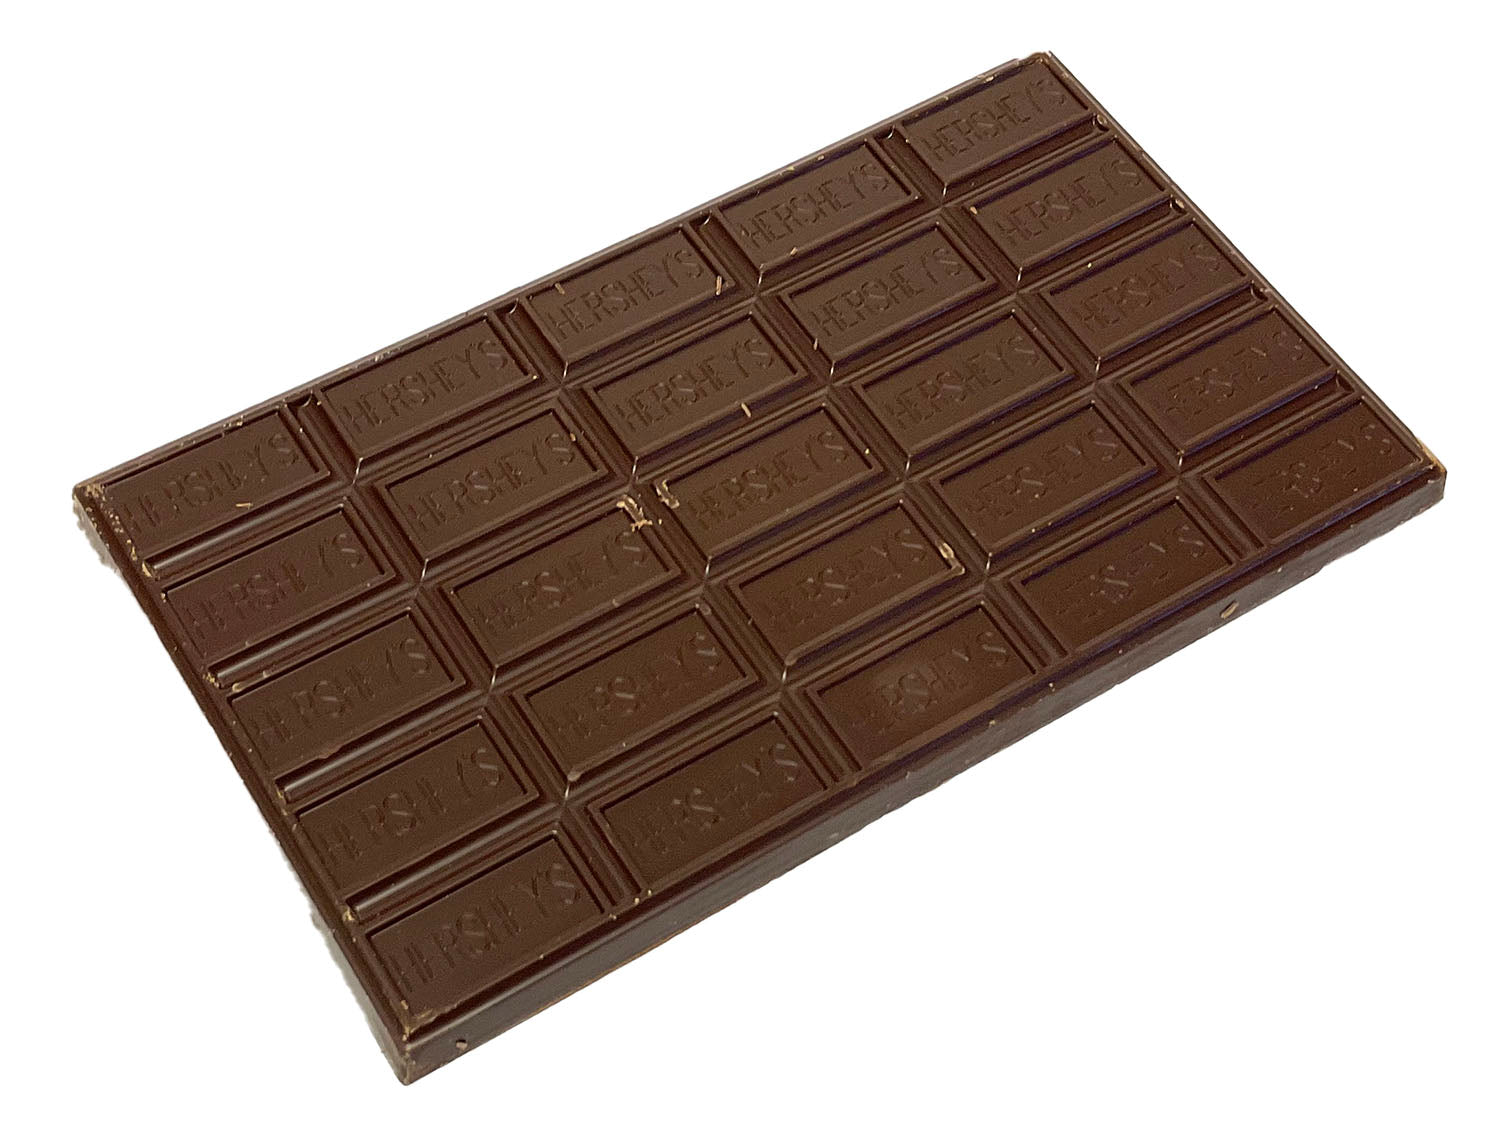 Hershey's Giant 7.56 oz Special Dark Chocolate Bar open